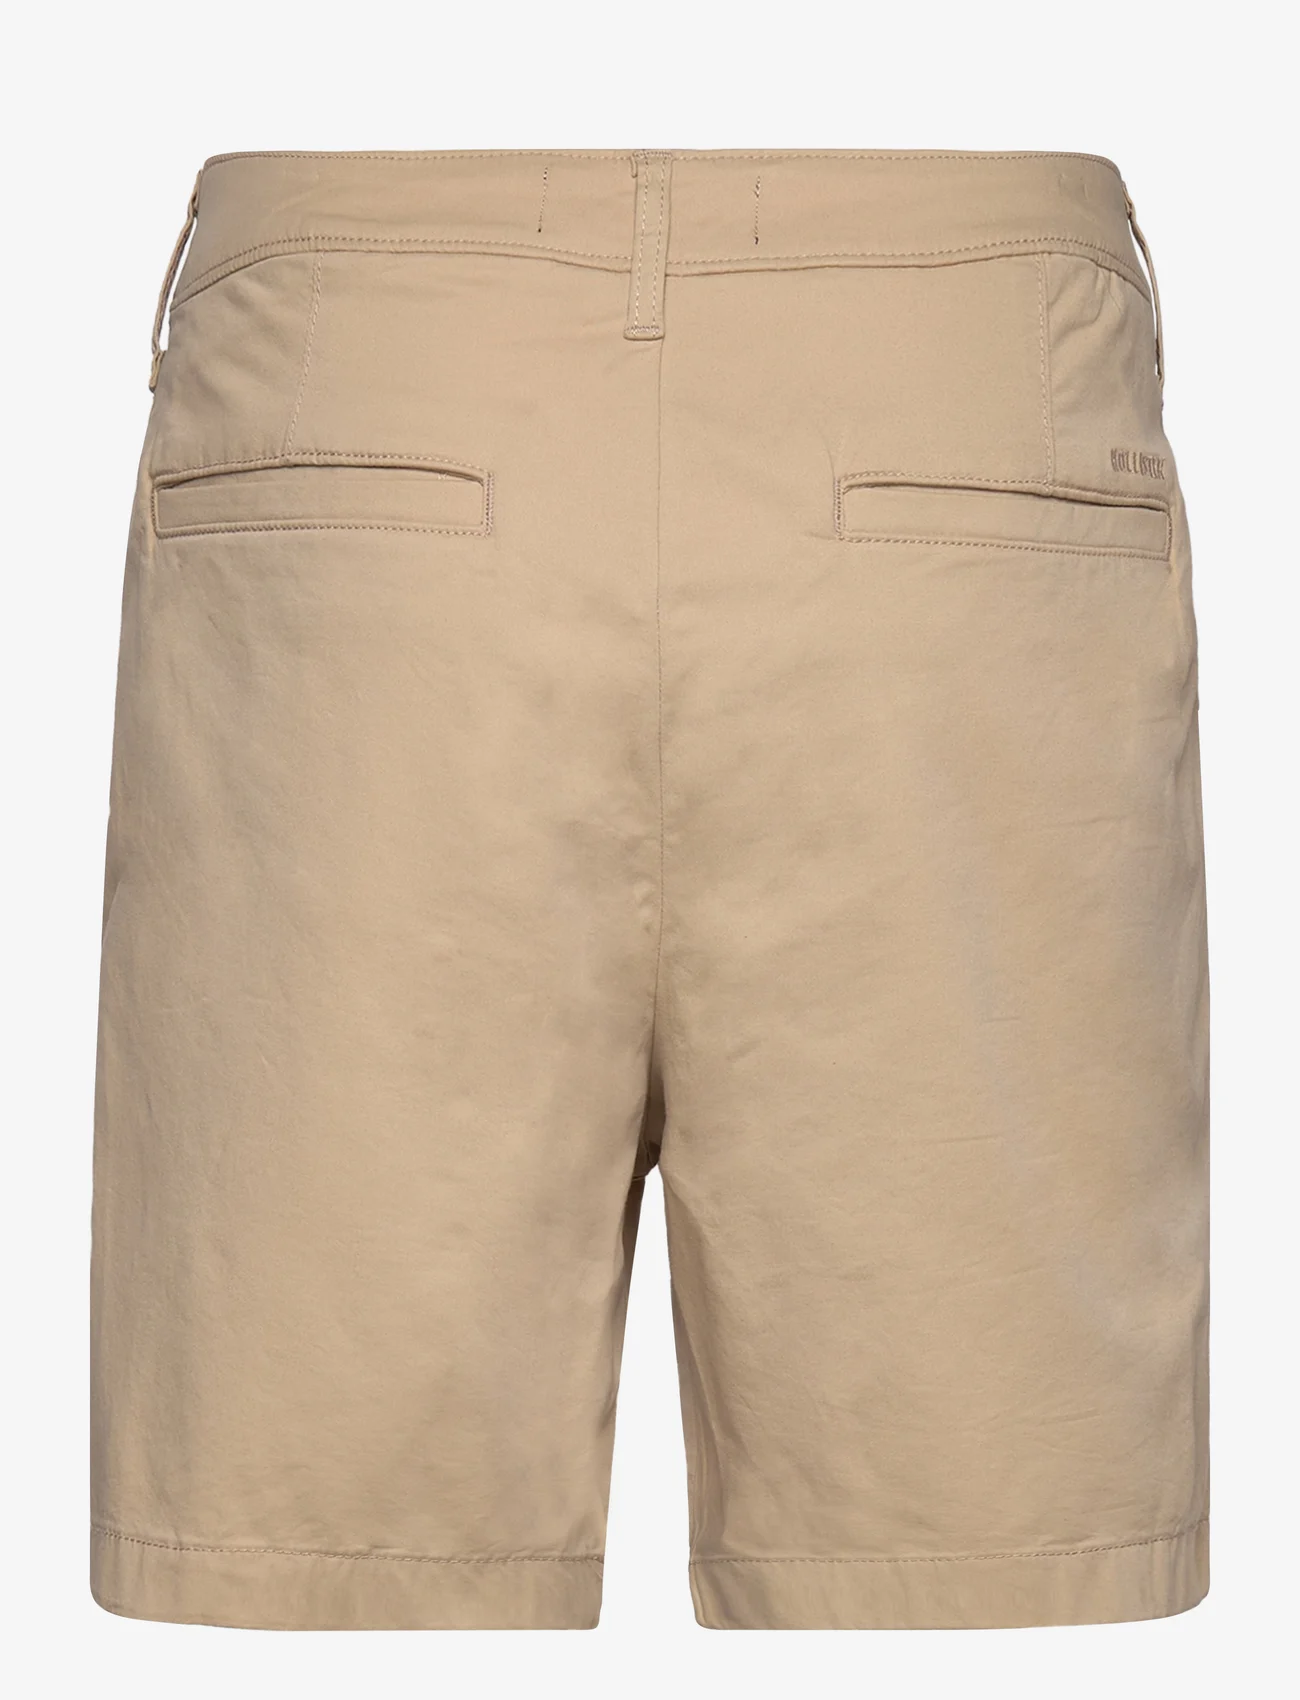 Hollister - HCo. GUYS SHORTS - chino shorts - safari - 1